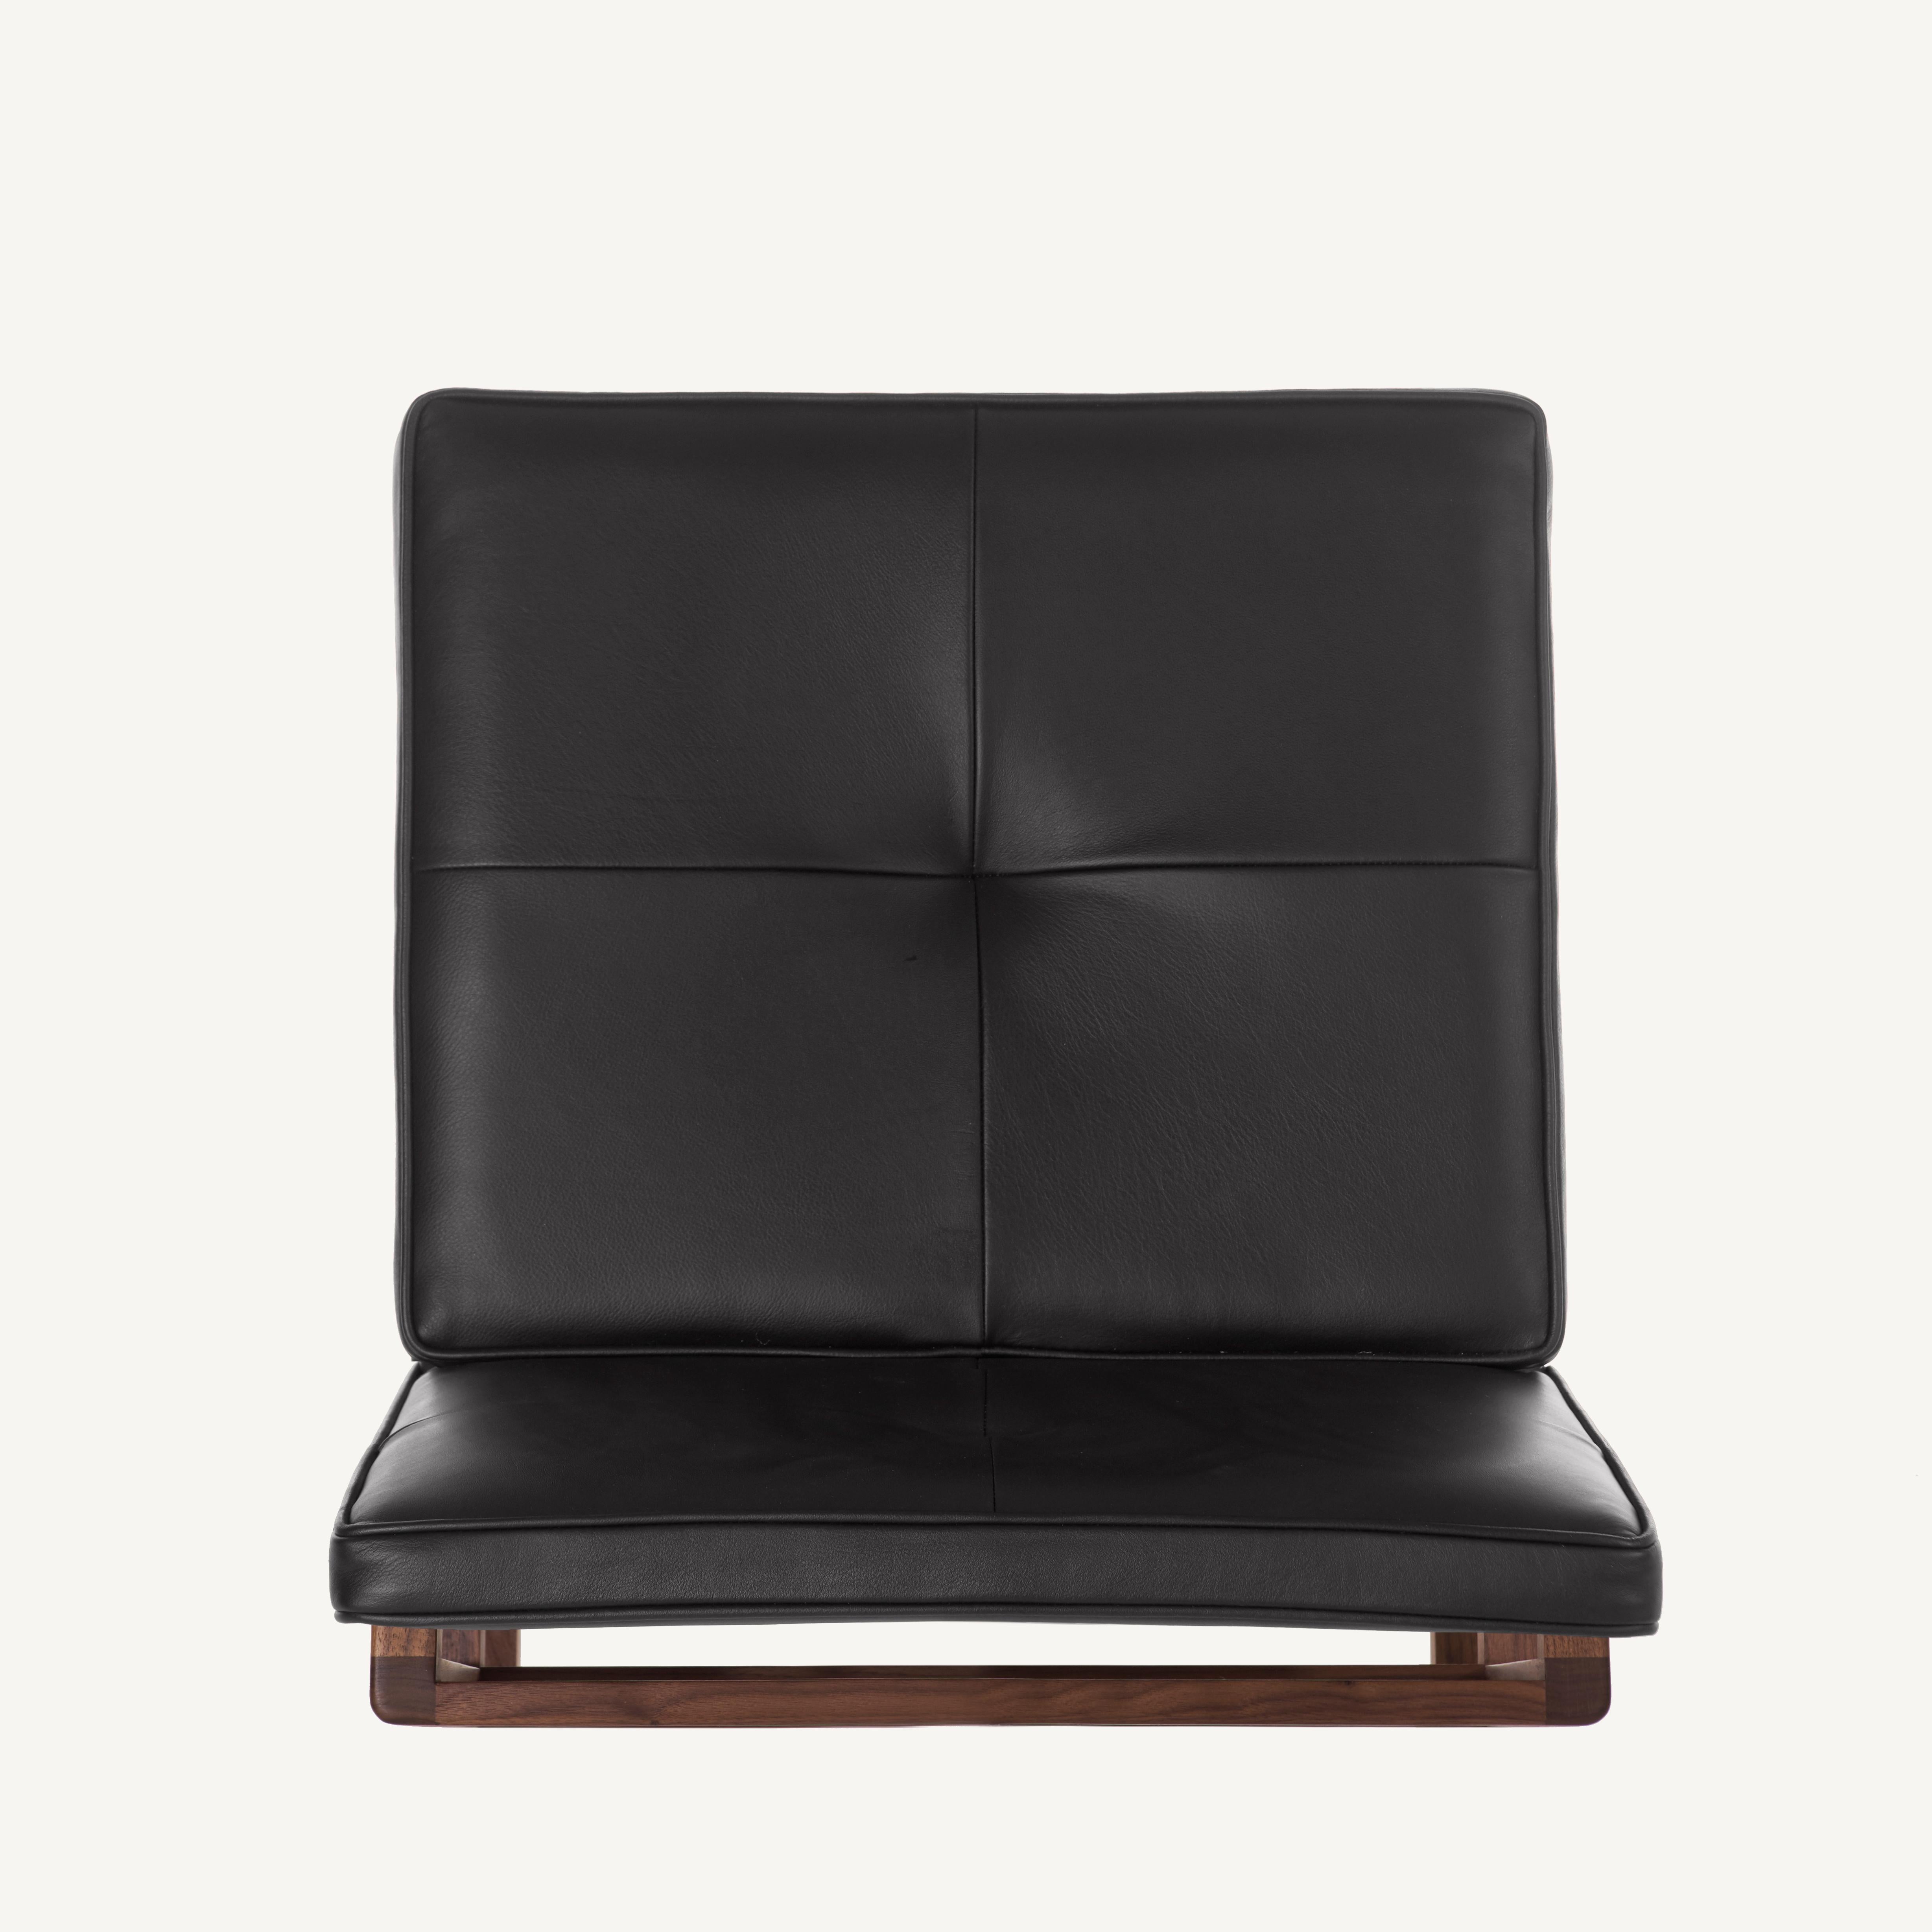 For Sale: Black (Comfort 99991 Black) Wood Frame Bar Stool in Walnut and Leather Designed by Craig Bassam 6